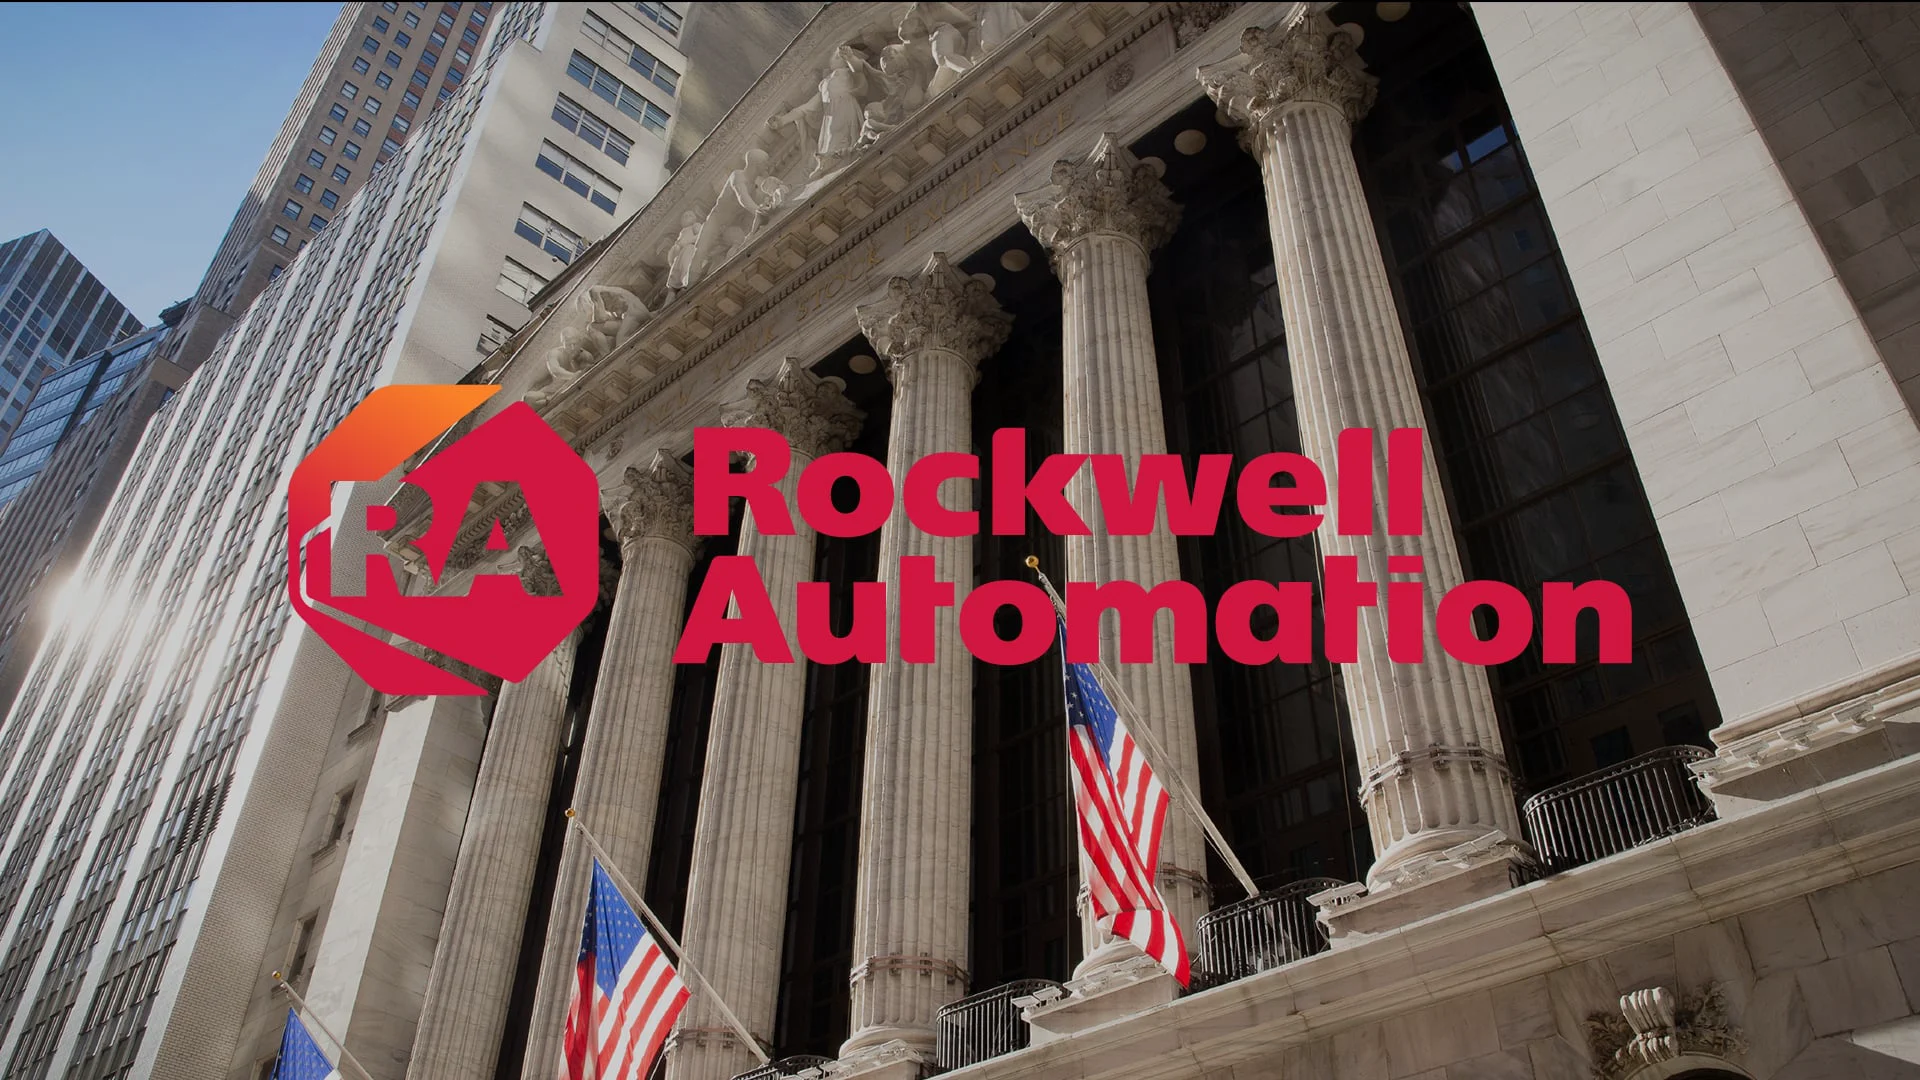 rockwell automation logo